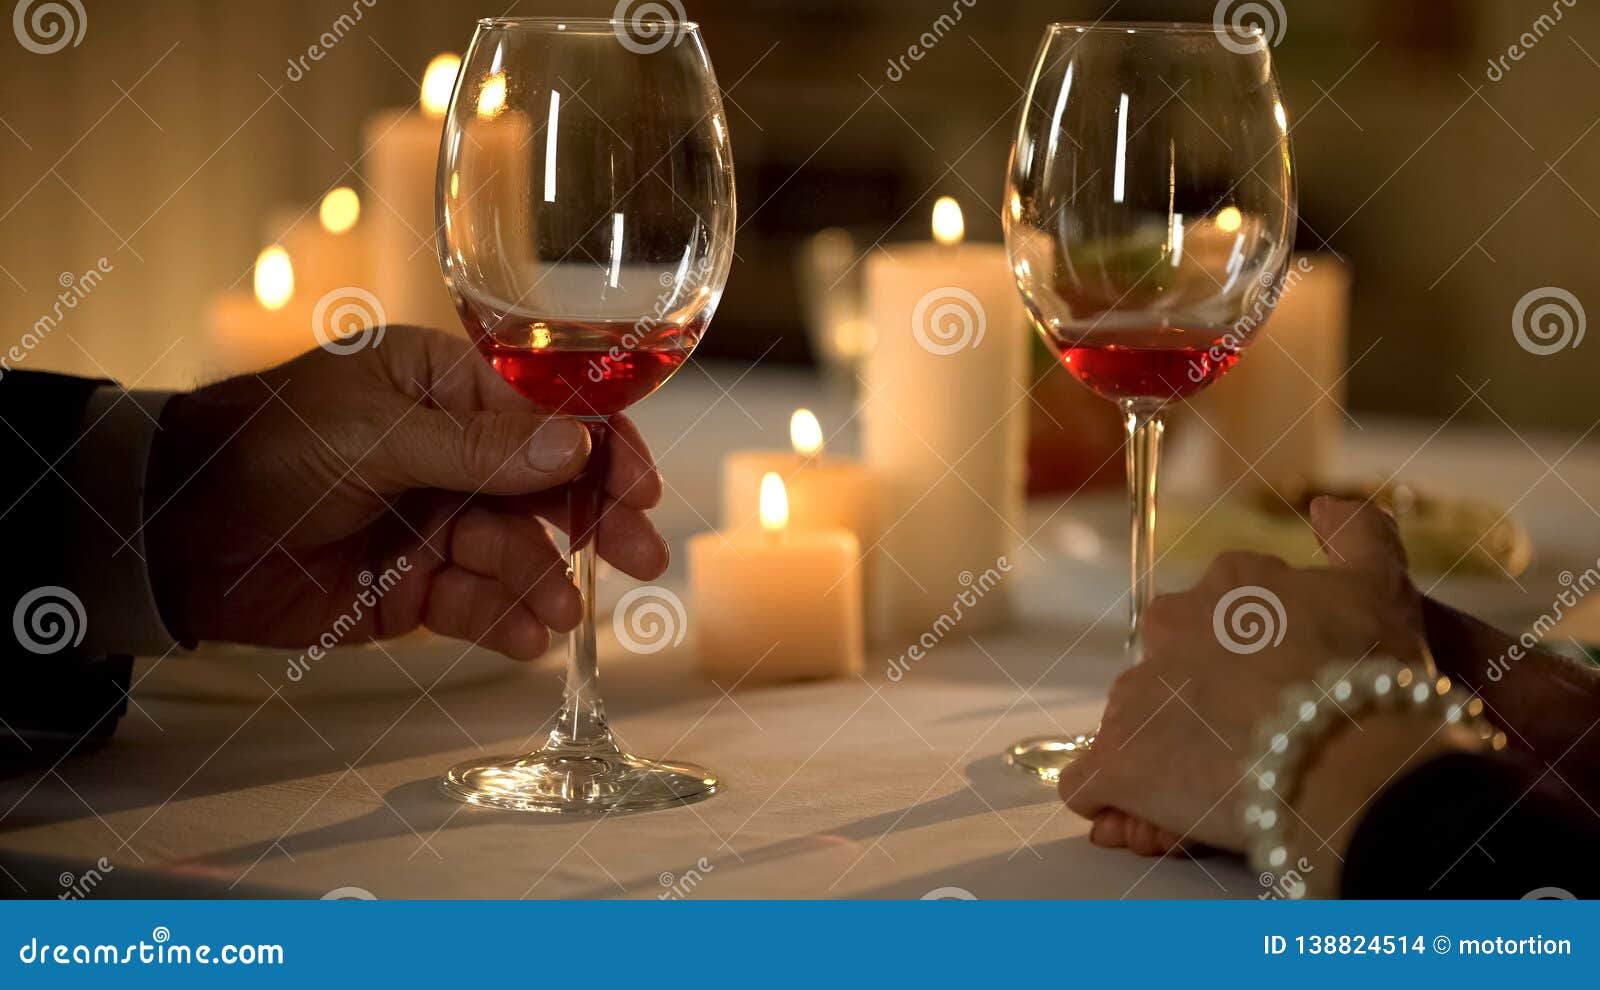 Champagne tasting dating